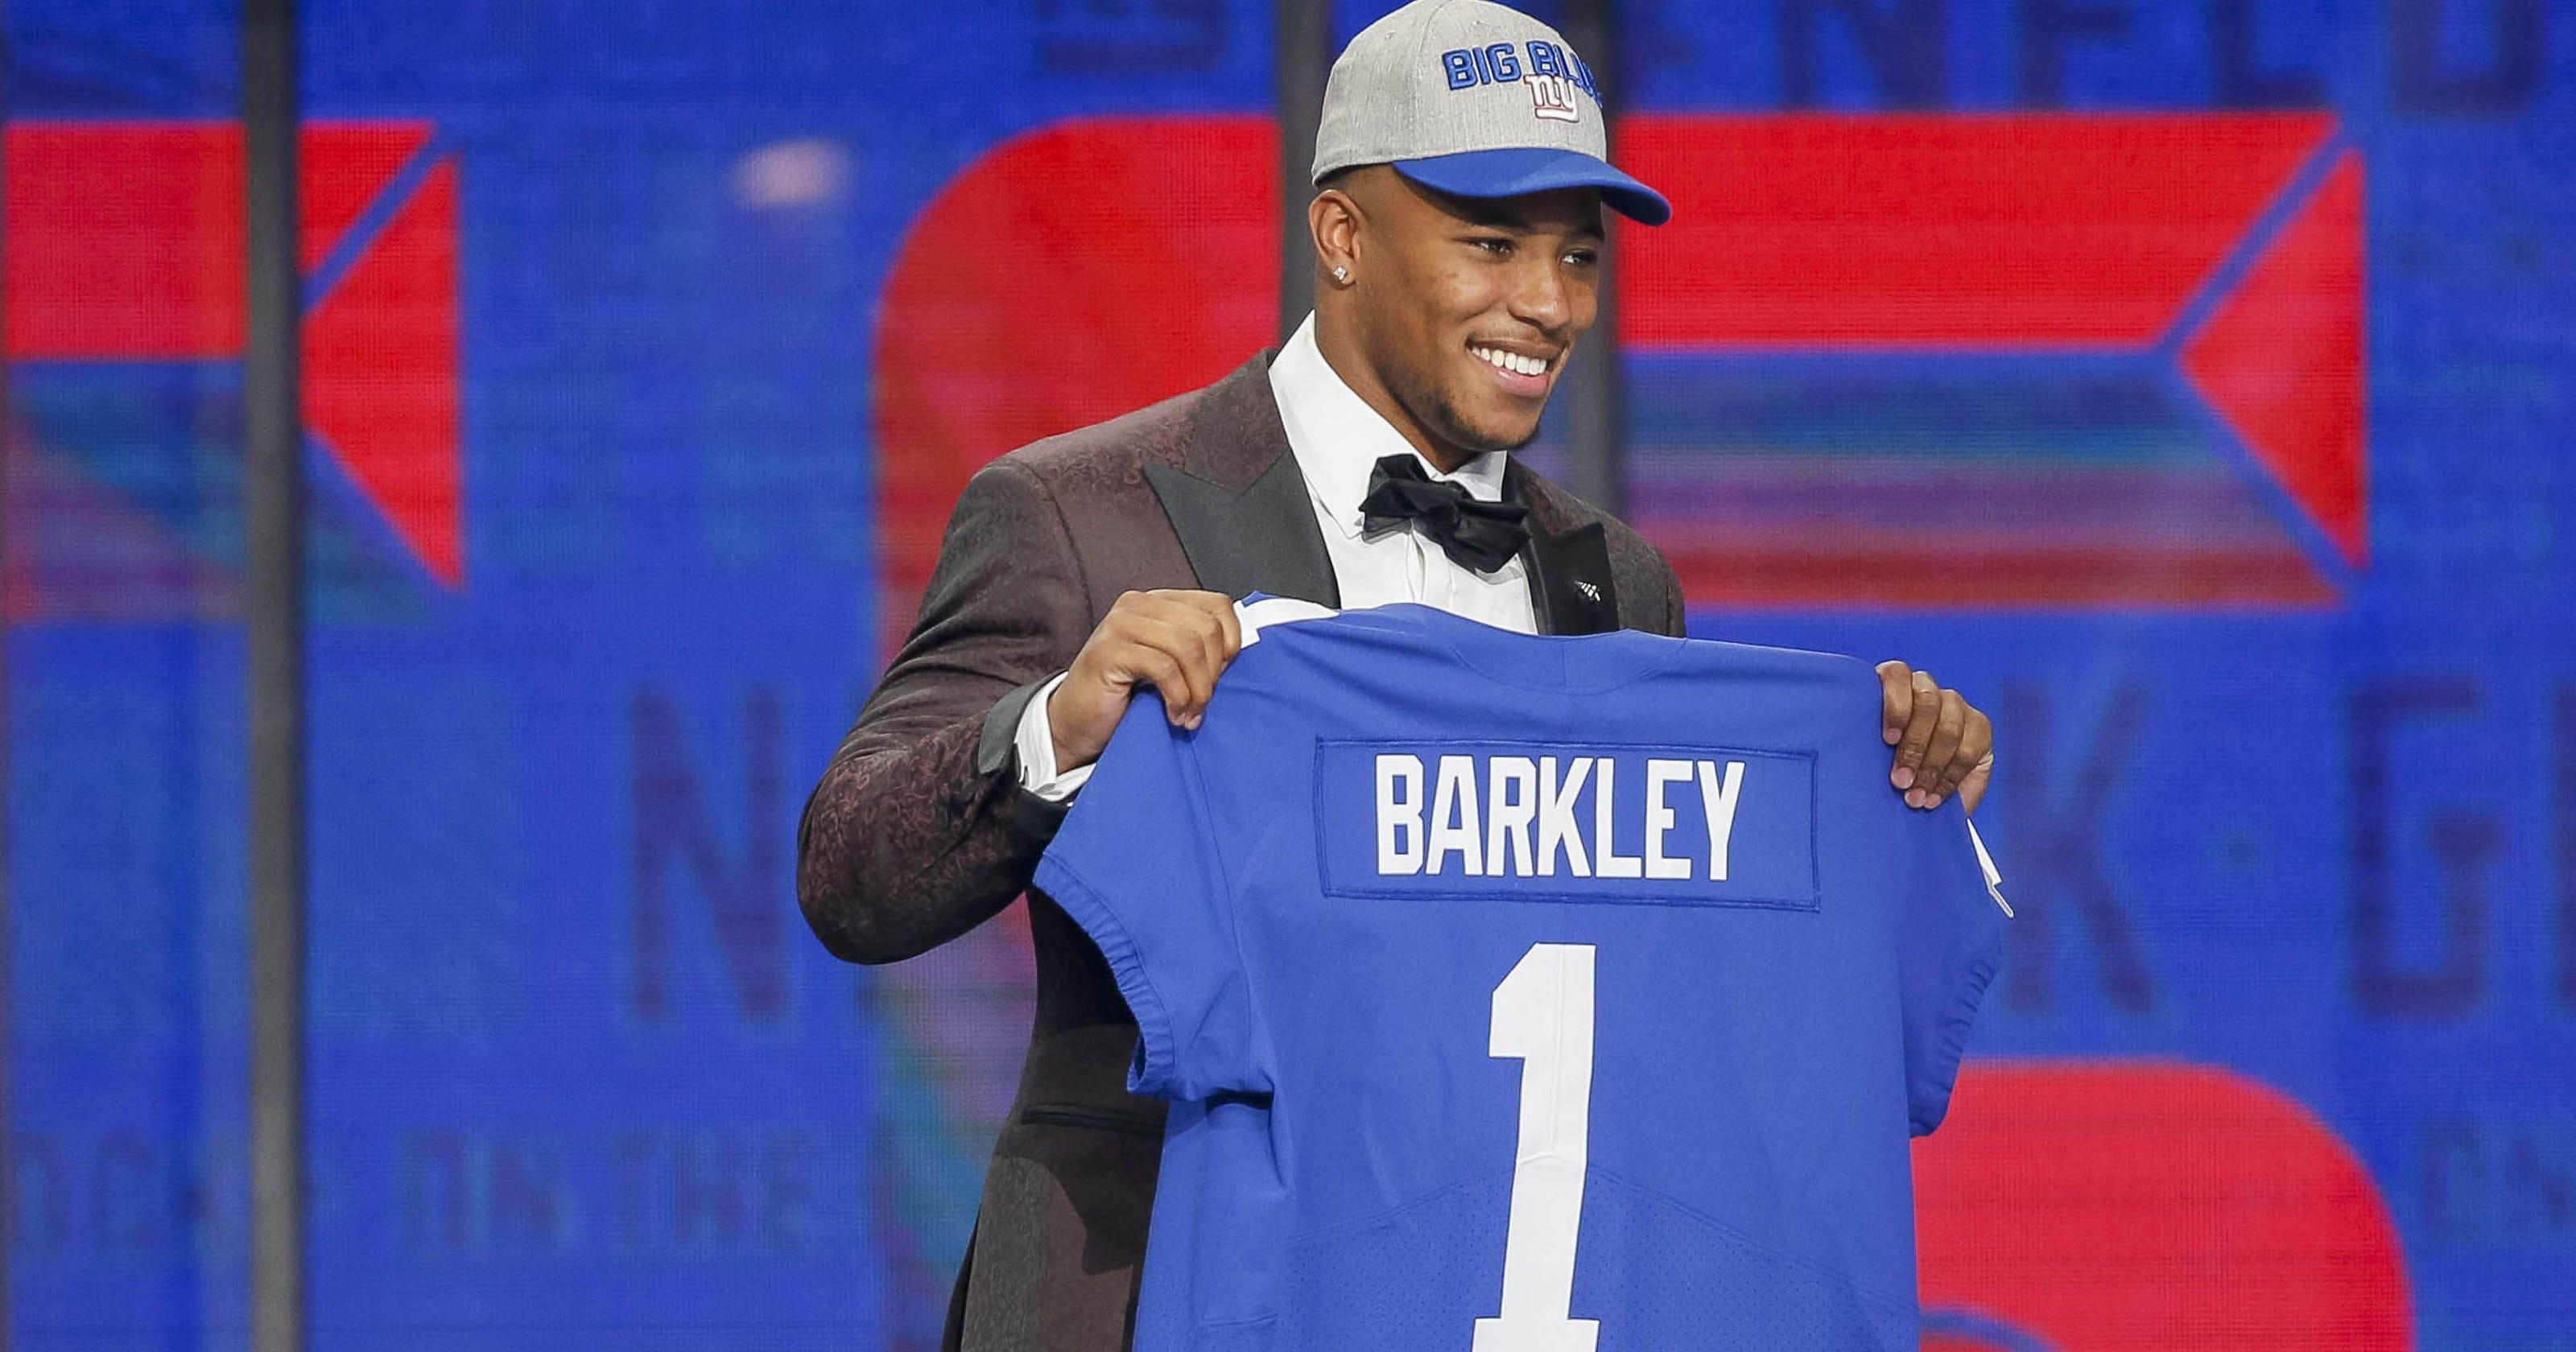 NFL Draft: New York Giants take Saquon Barkley of Penn State